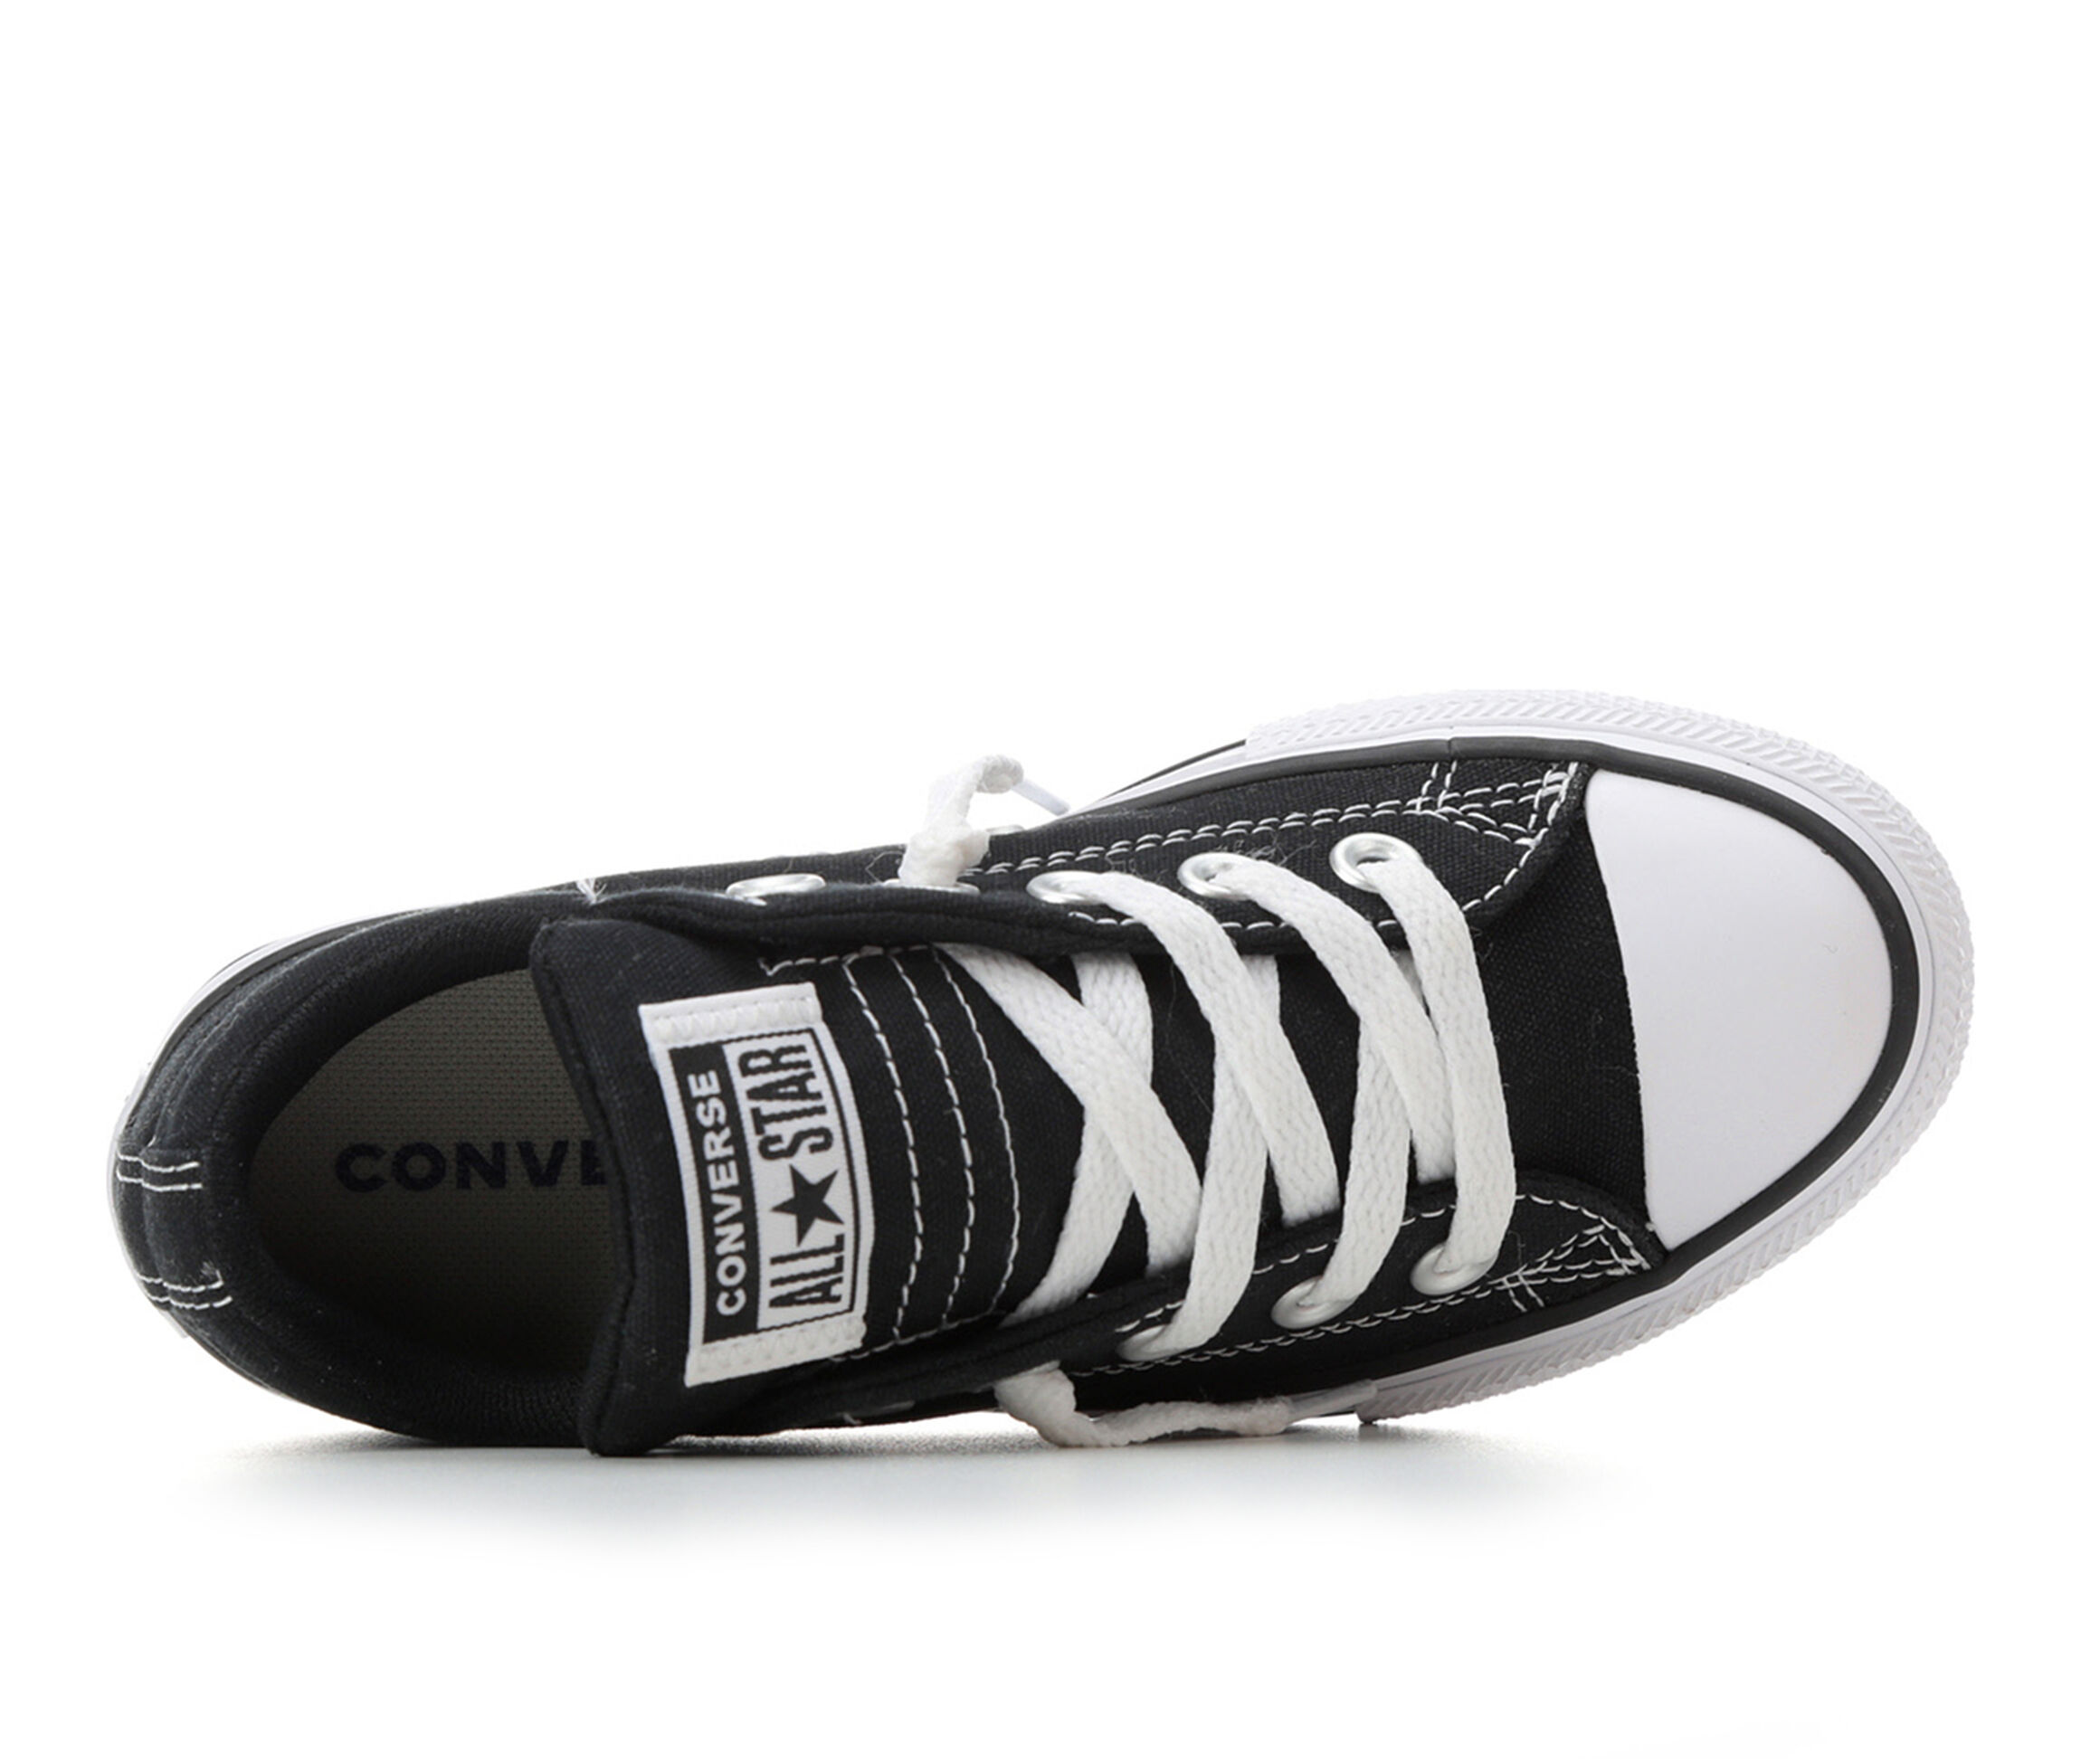 Converse Shoes at Shoe Carnival | Platform Sneakers, Chuc...